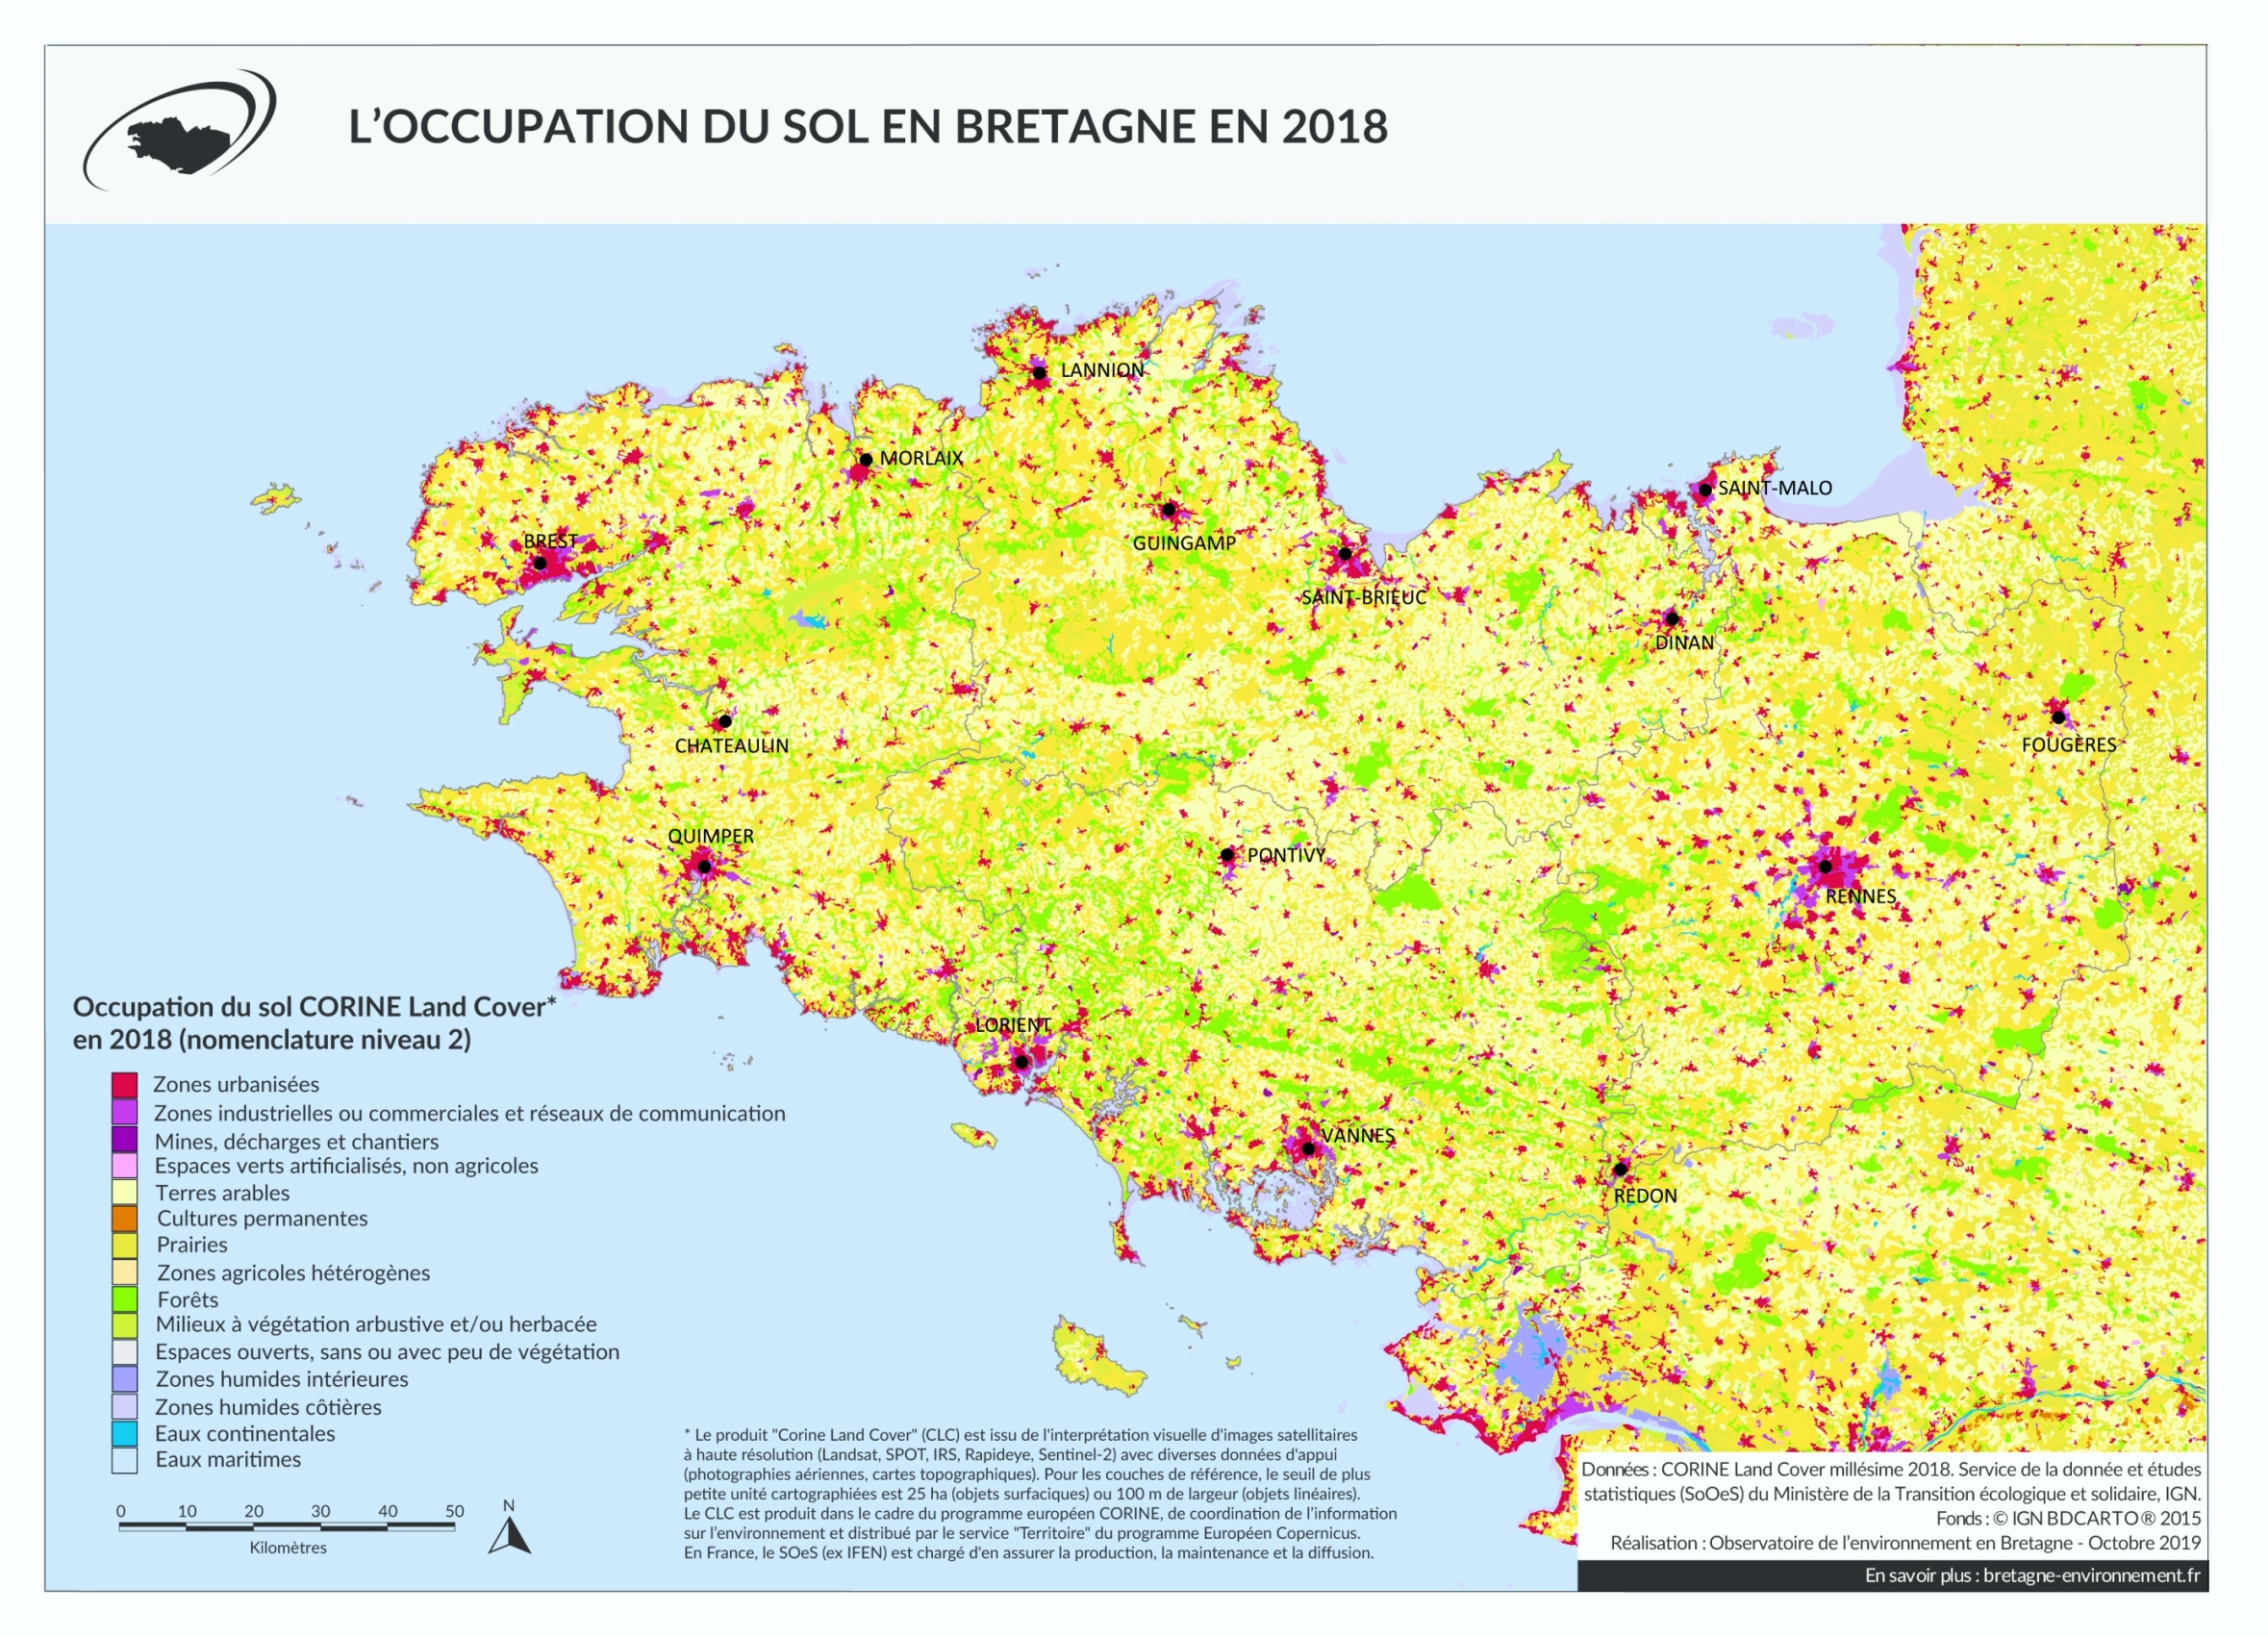 Occupation du sol CORINE Land Cover en Bretagne en 2018